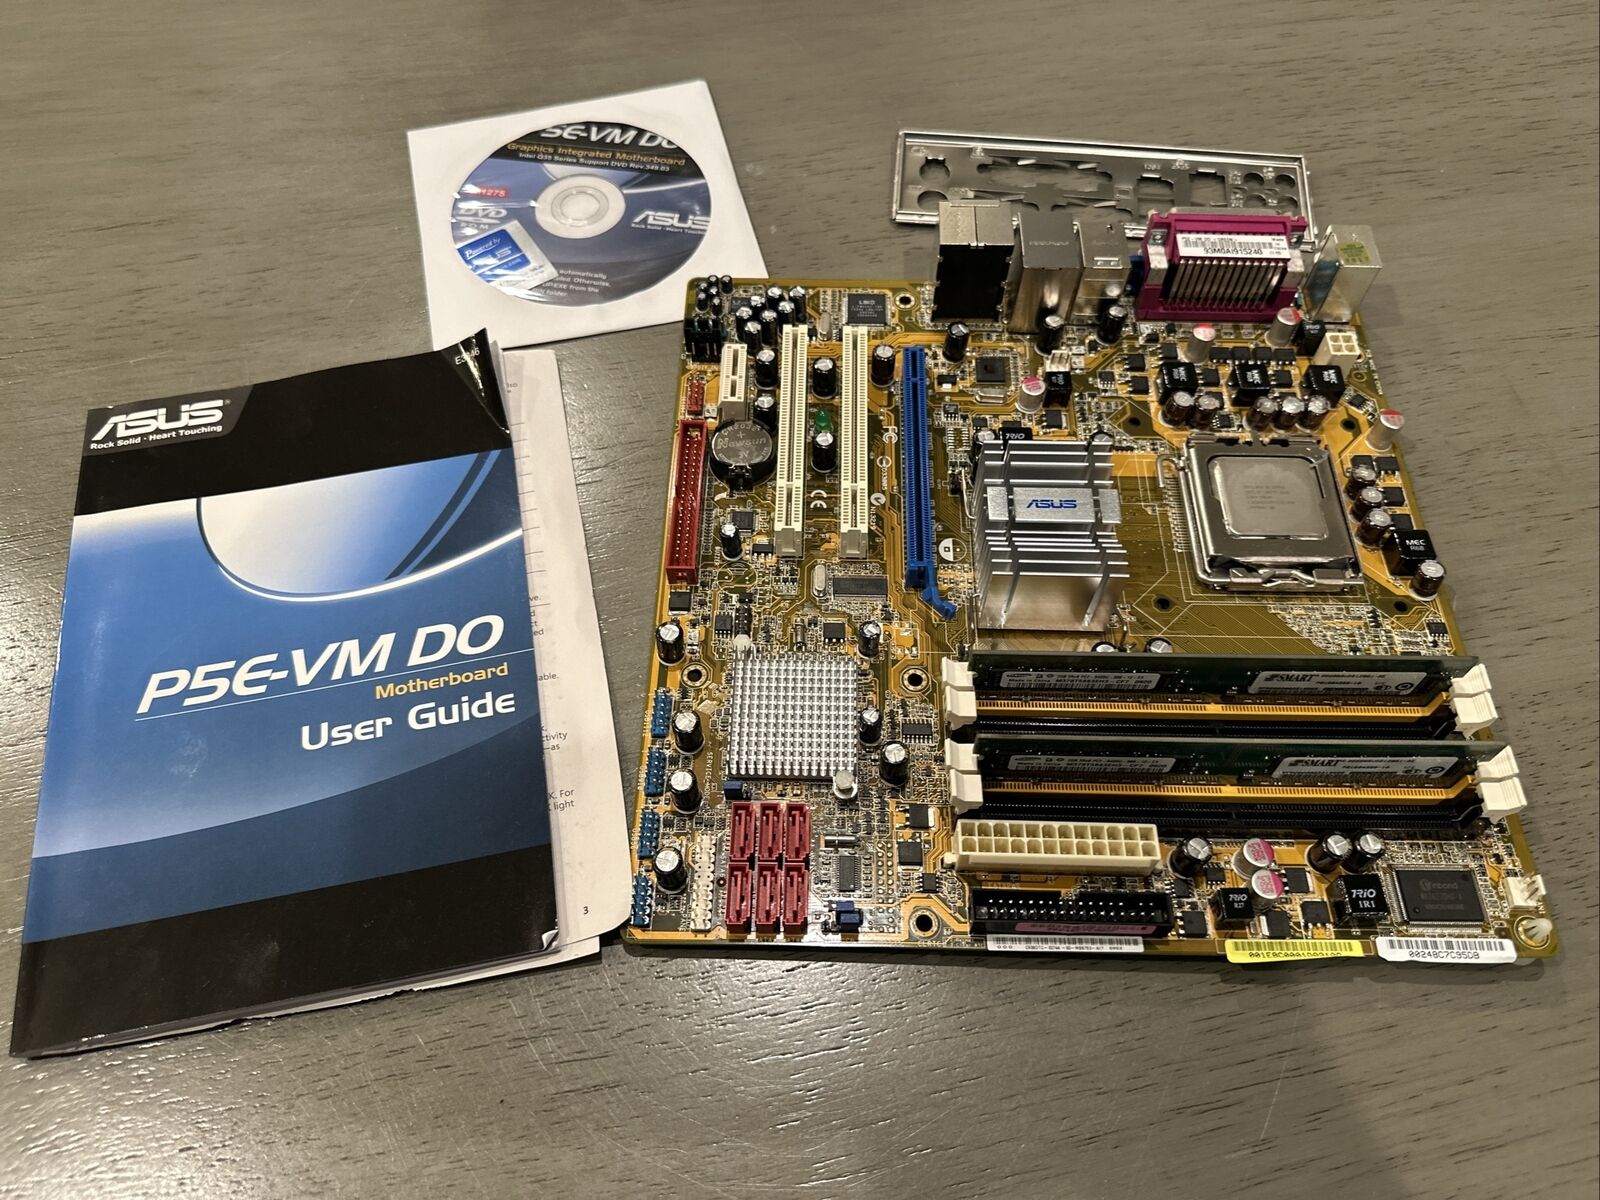 ASUS P5E-VM DO LGA775 Intel Q9550 Quad Core 2.8 ghz w/Backplate